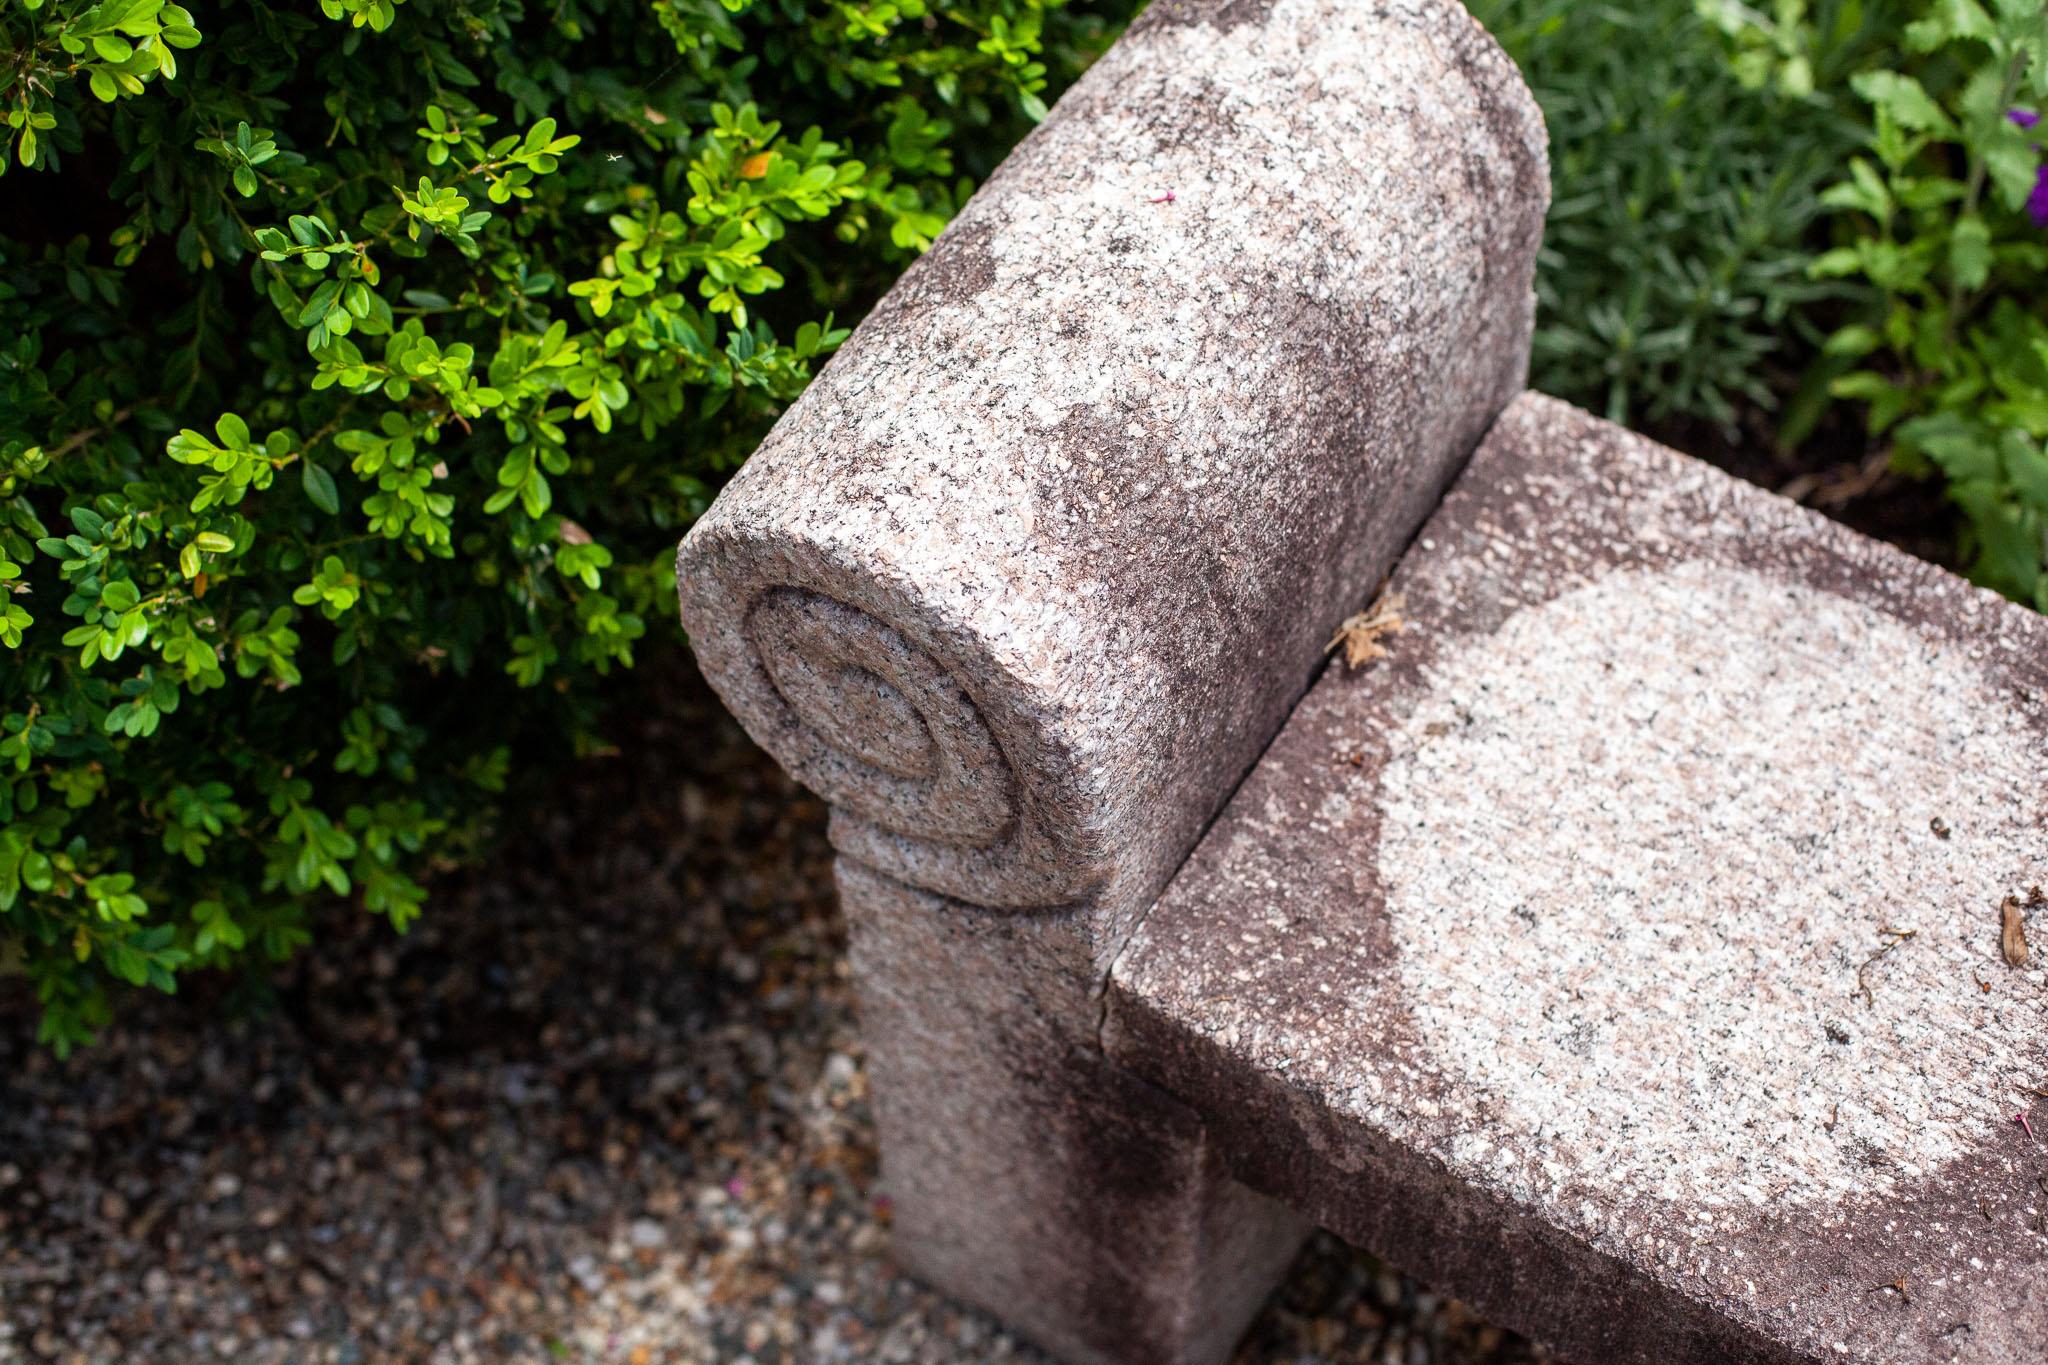 granite garden furniture